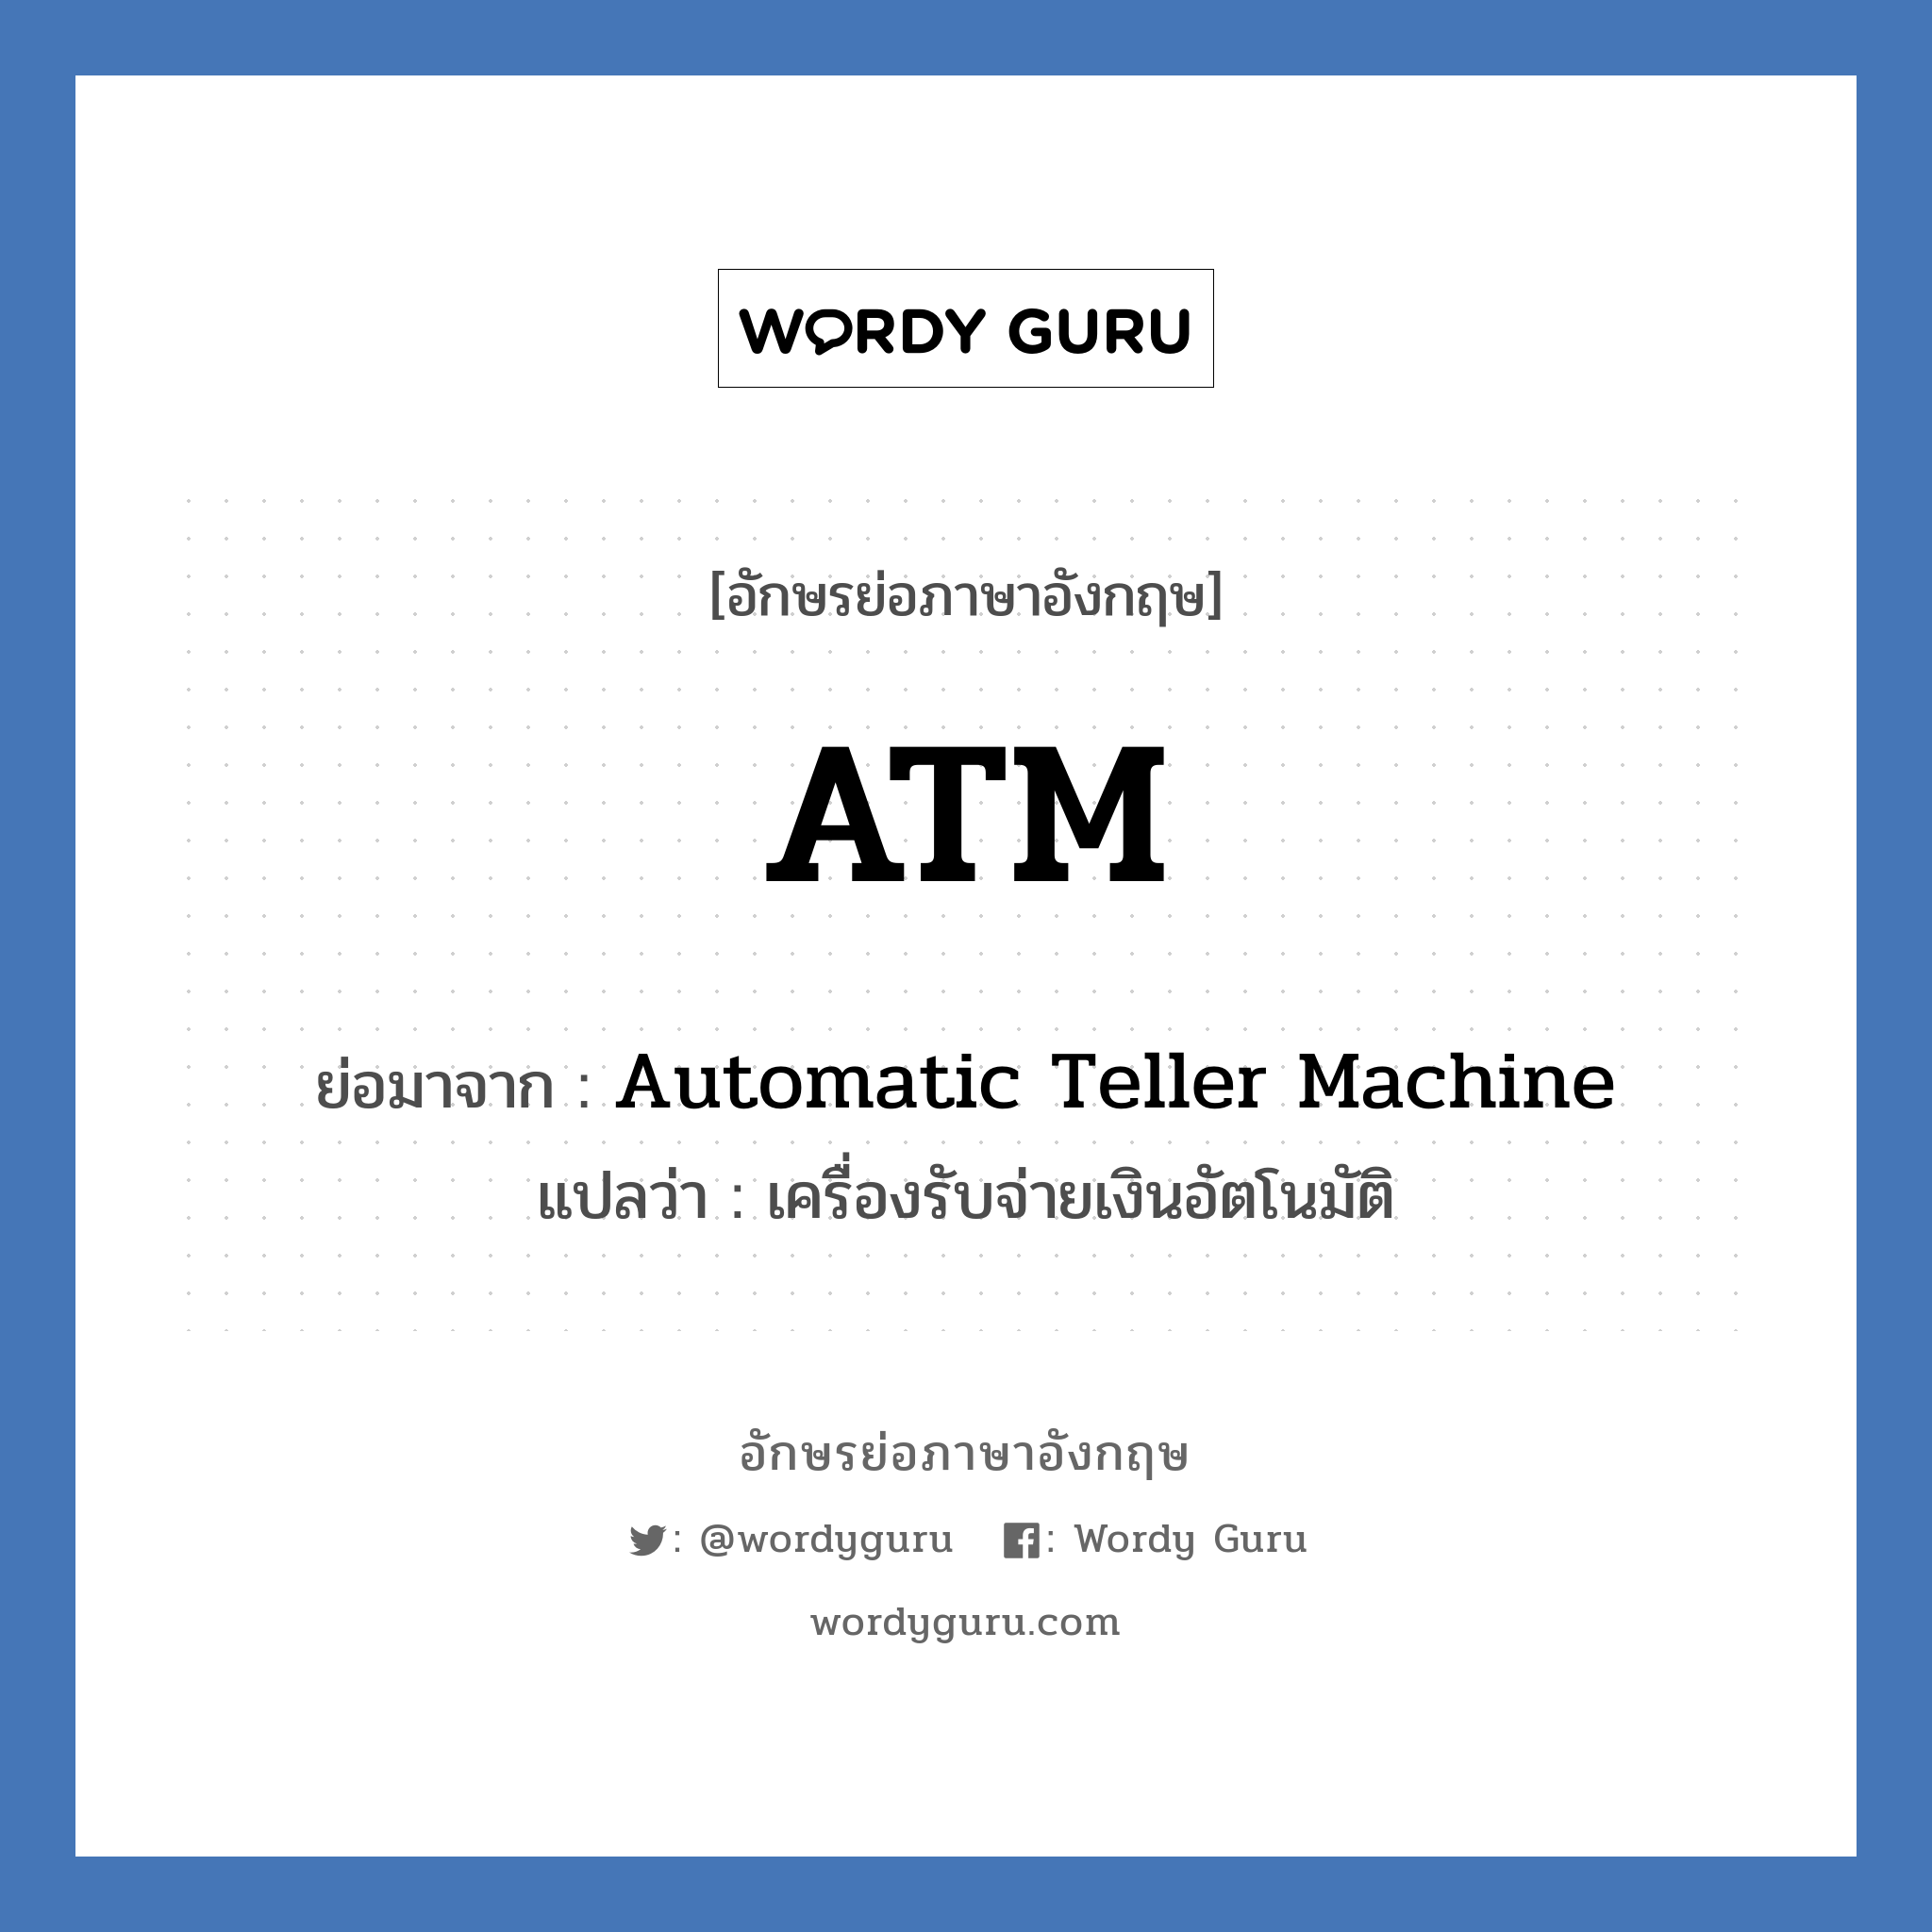 ATM ย่อมาจาก? แปลว่า?, อักษรย่อภาษาอังกฤษ ATM ย่อมาจาก Automatic Teller Machine แปลว่า เครื่องรับจ่ายเงินอัตโนมัติ